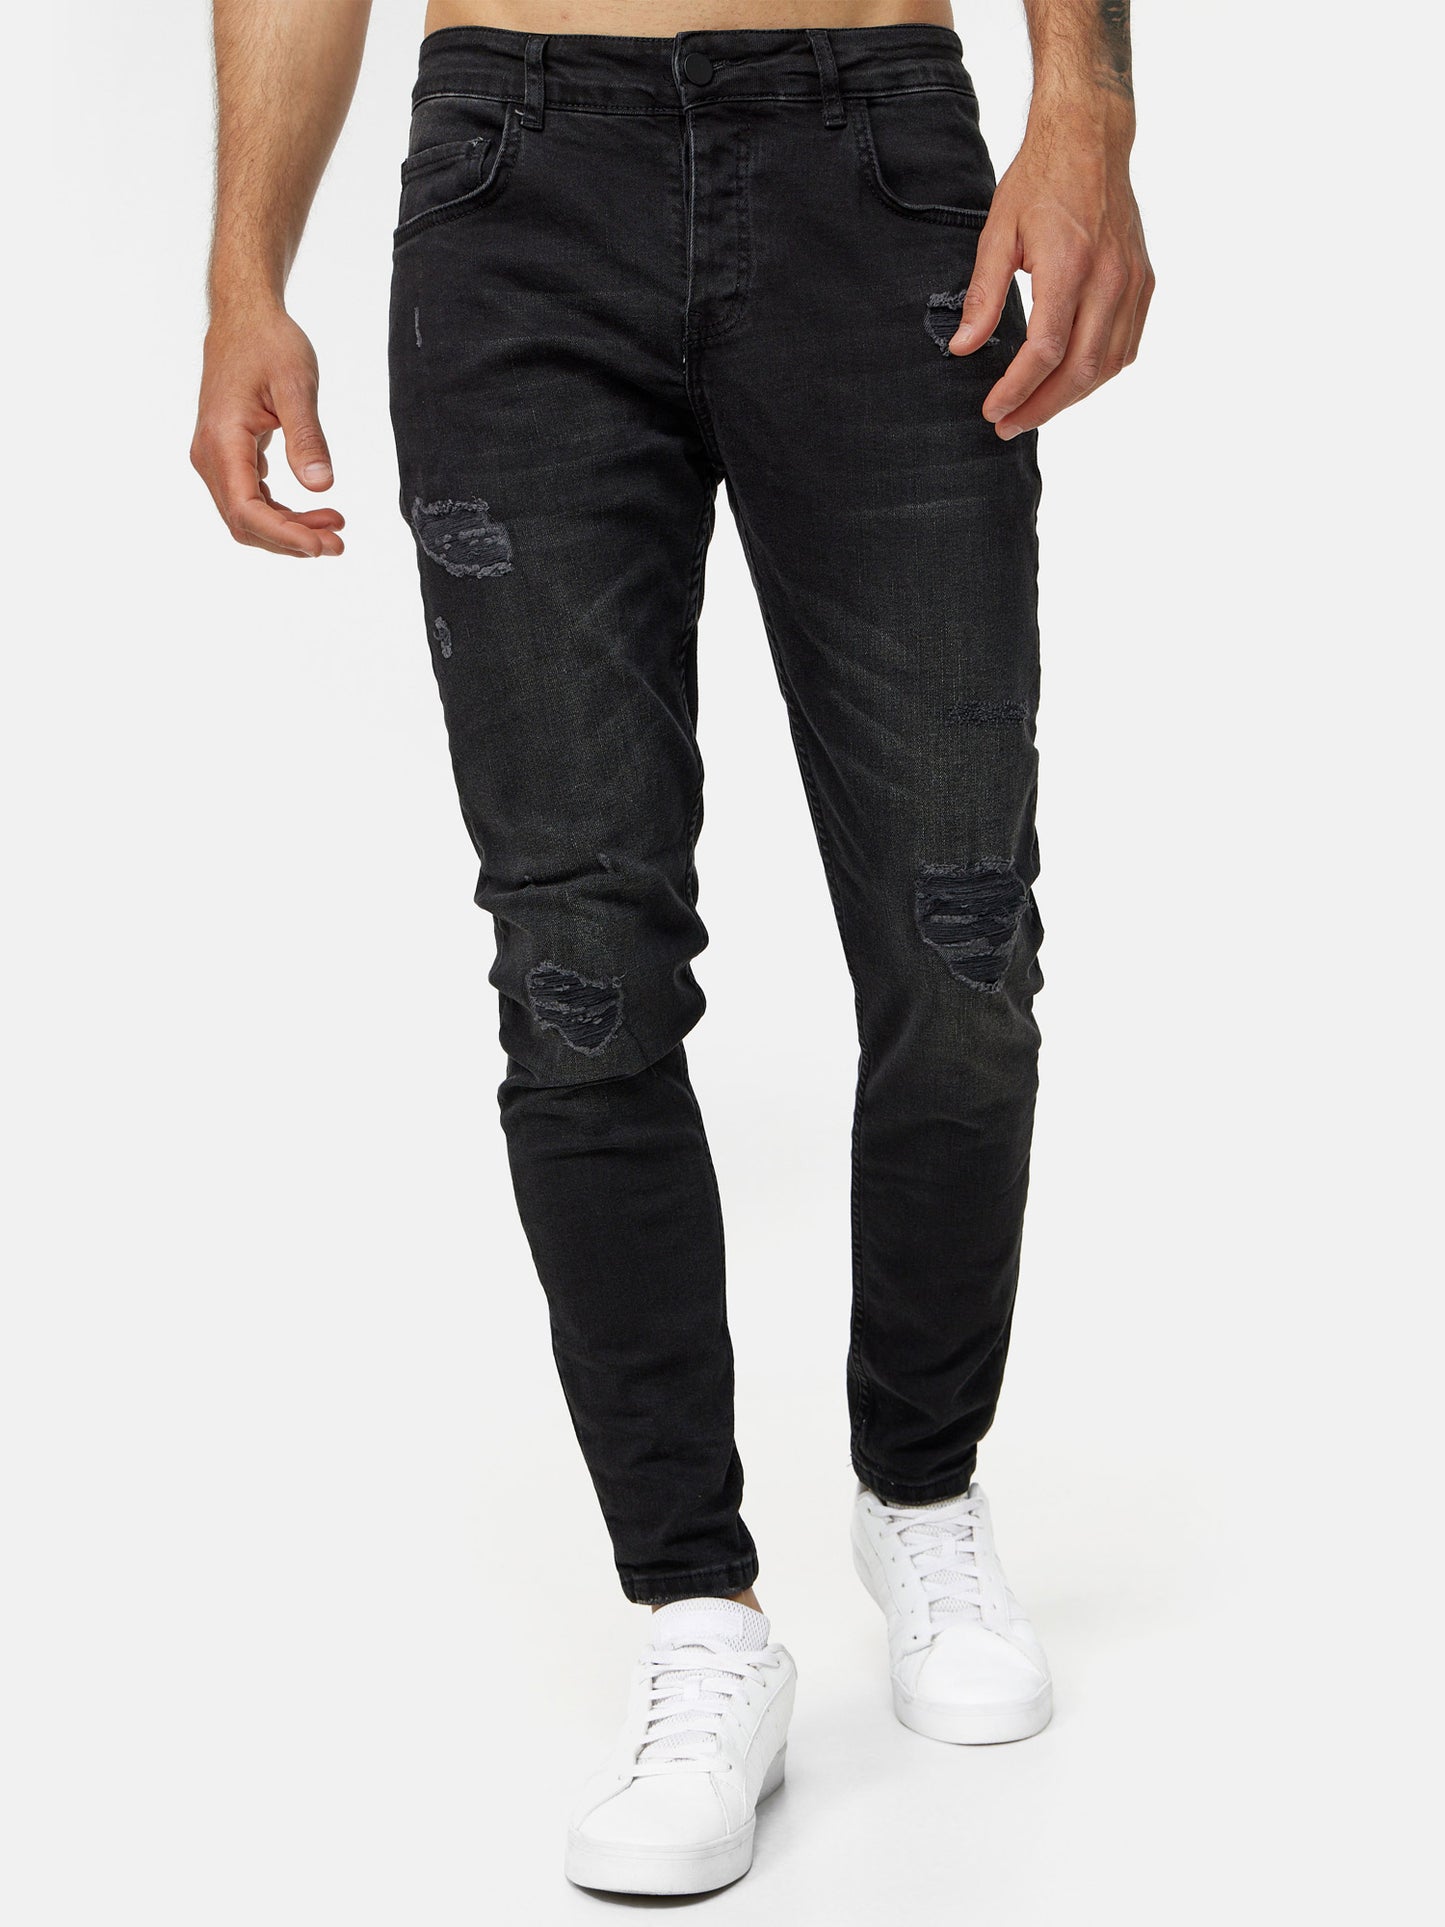 Tazzio Herren Jeans Skinny Fit A107